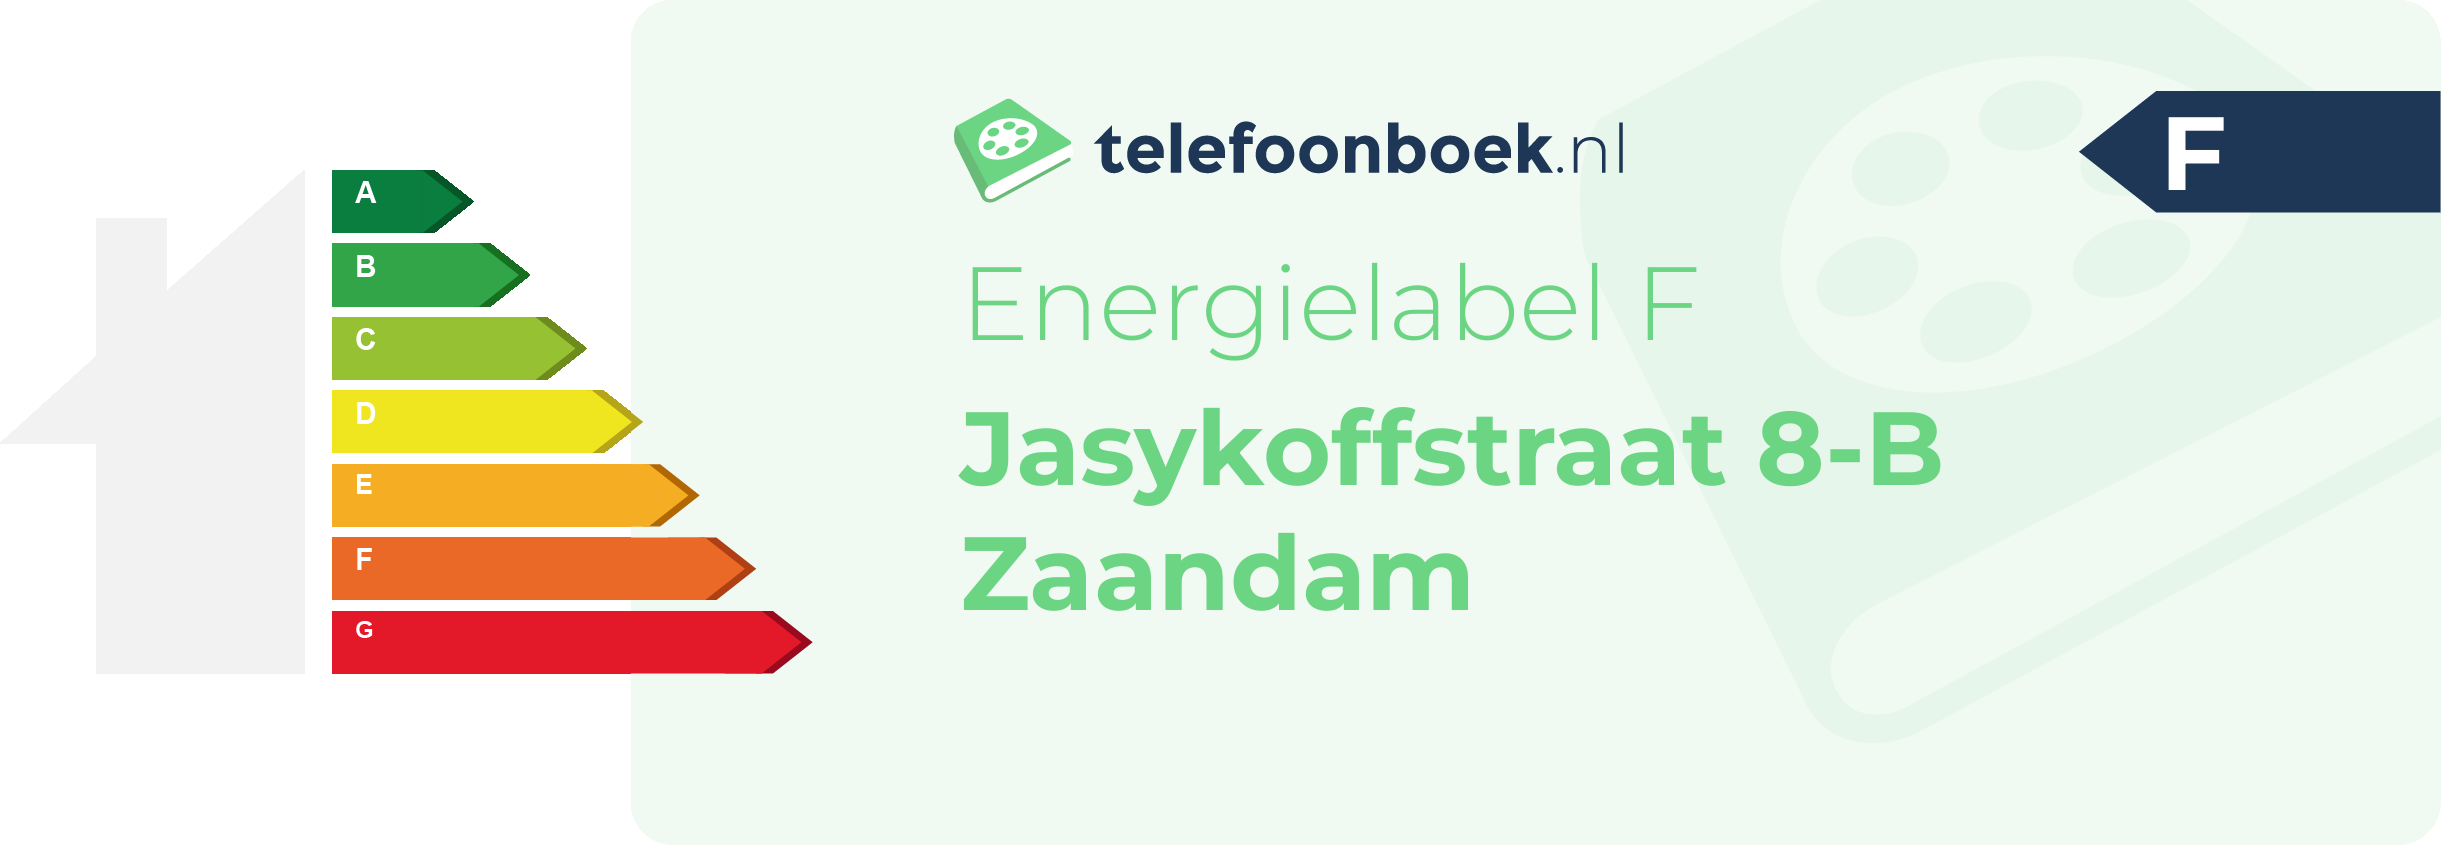 Energielabel Jasykoffstraat 8-B Zaandam